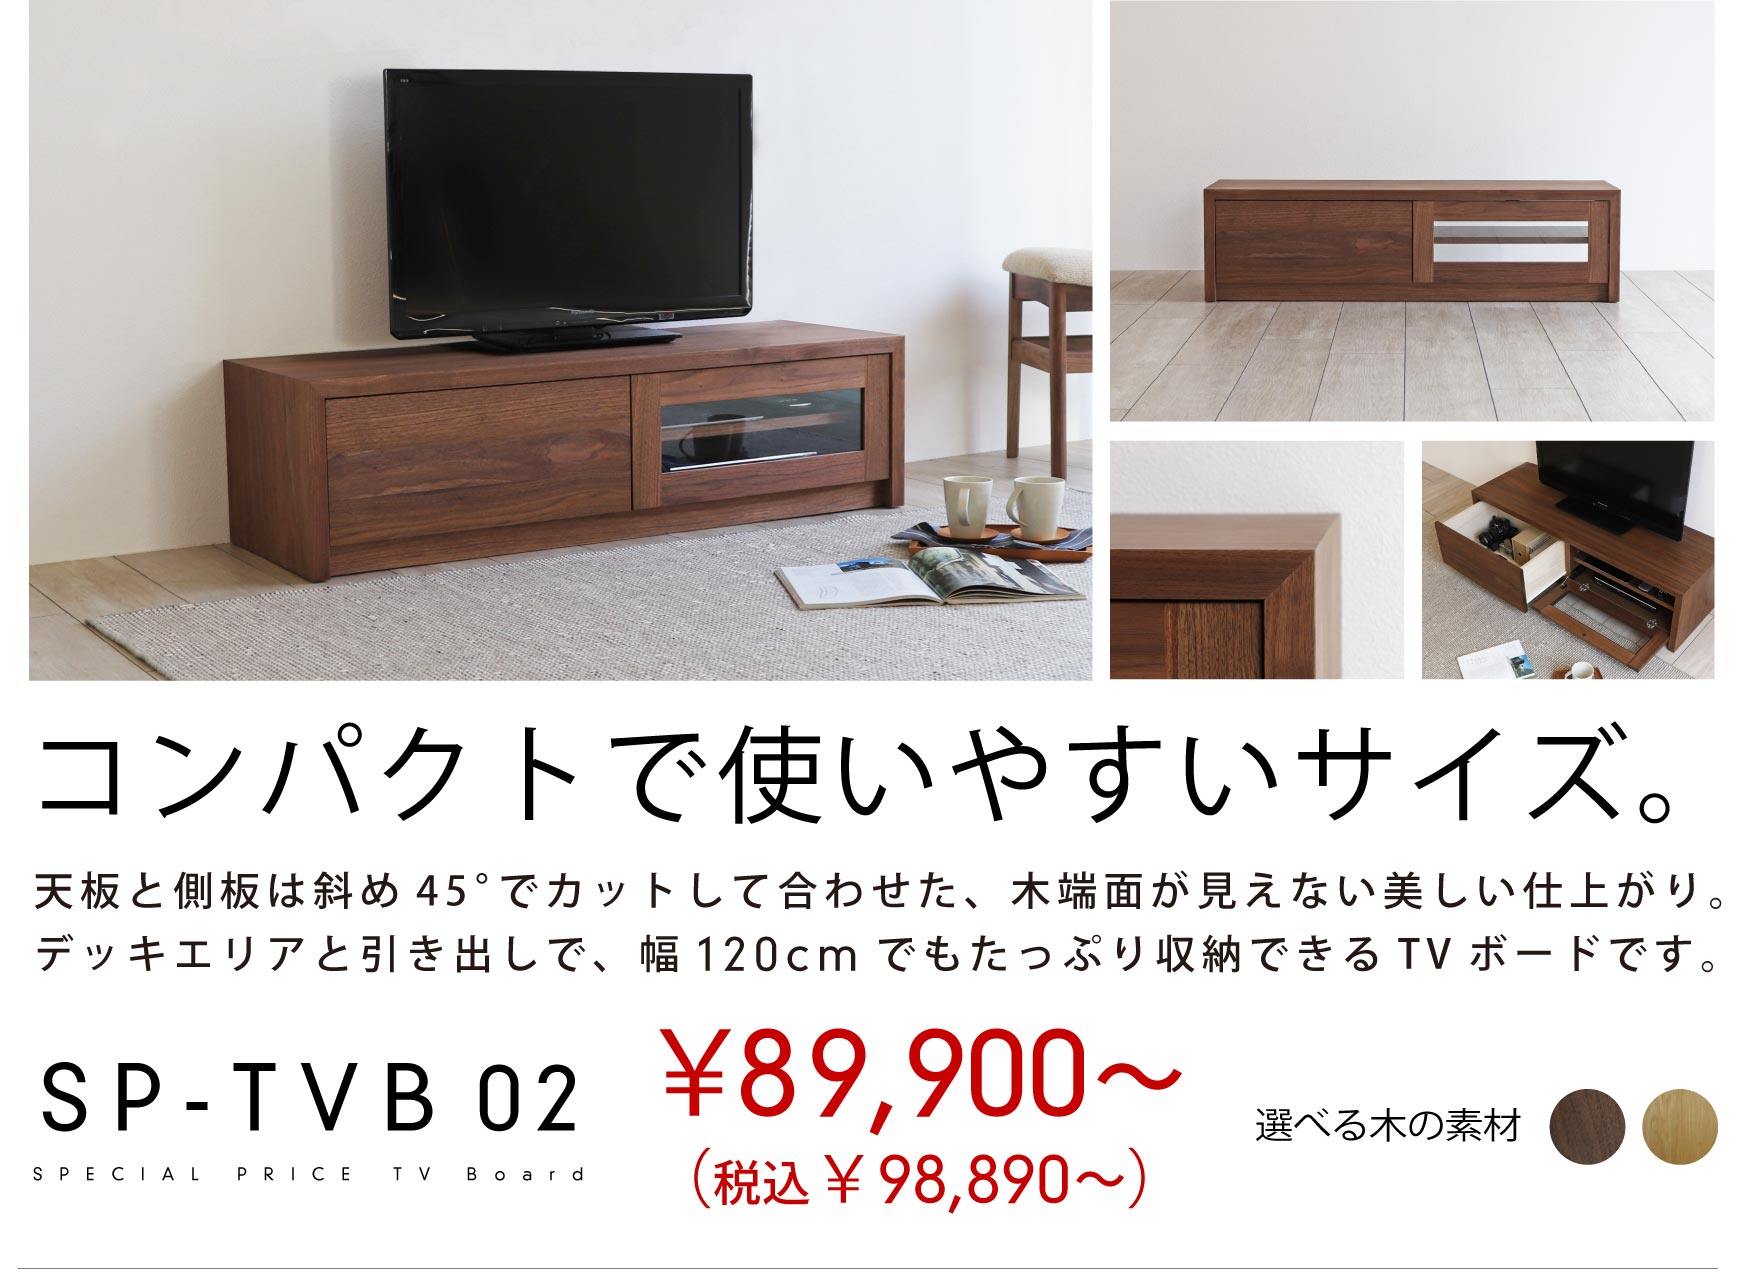 SP-TVB02 家具職人による丁寧な仕上がり、お買い求めやすいテレビボード